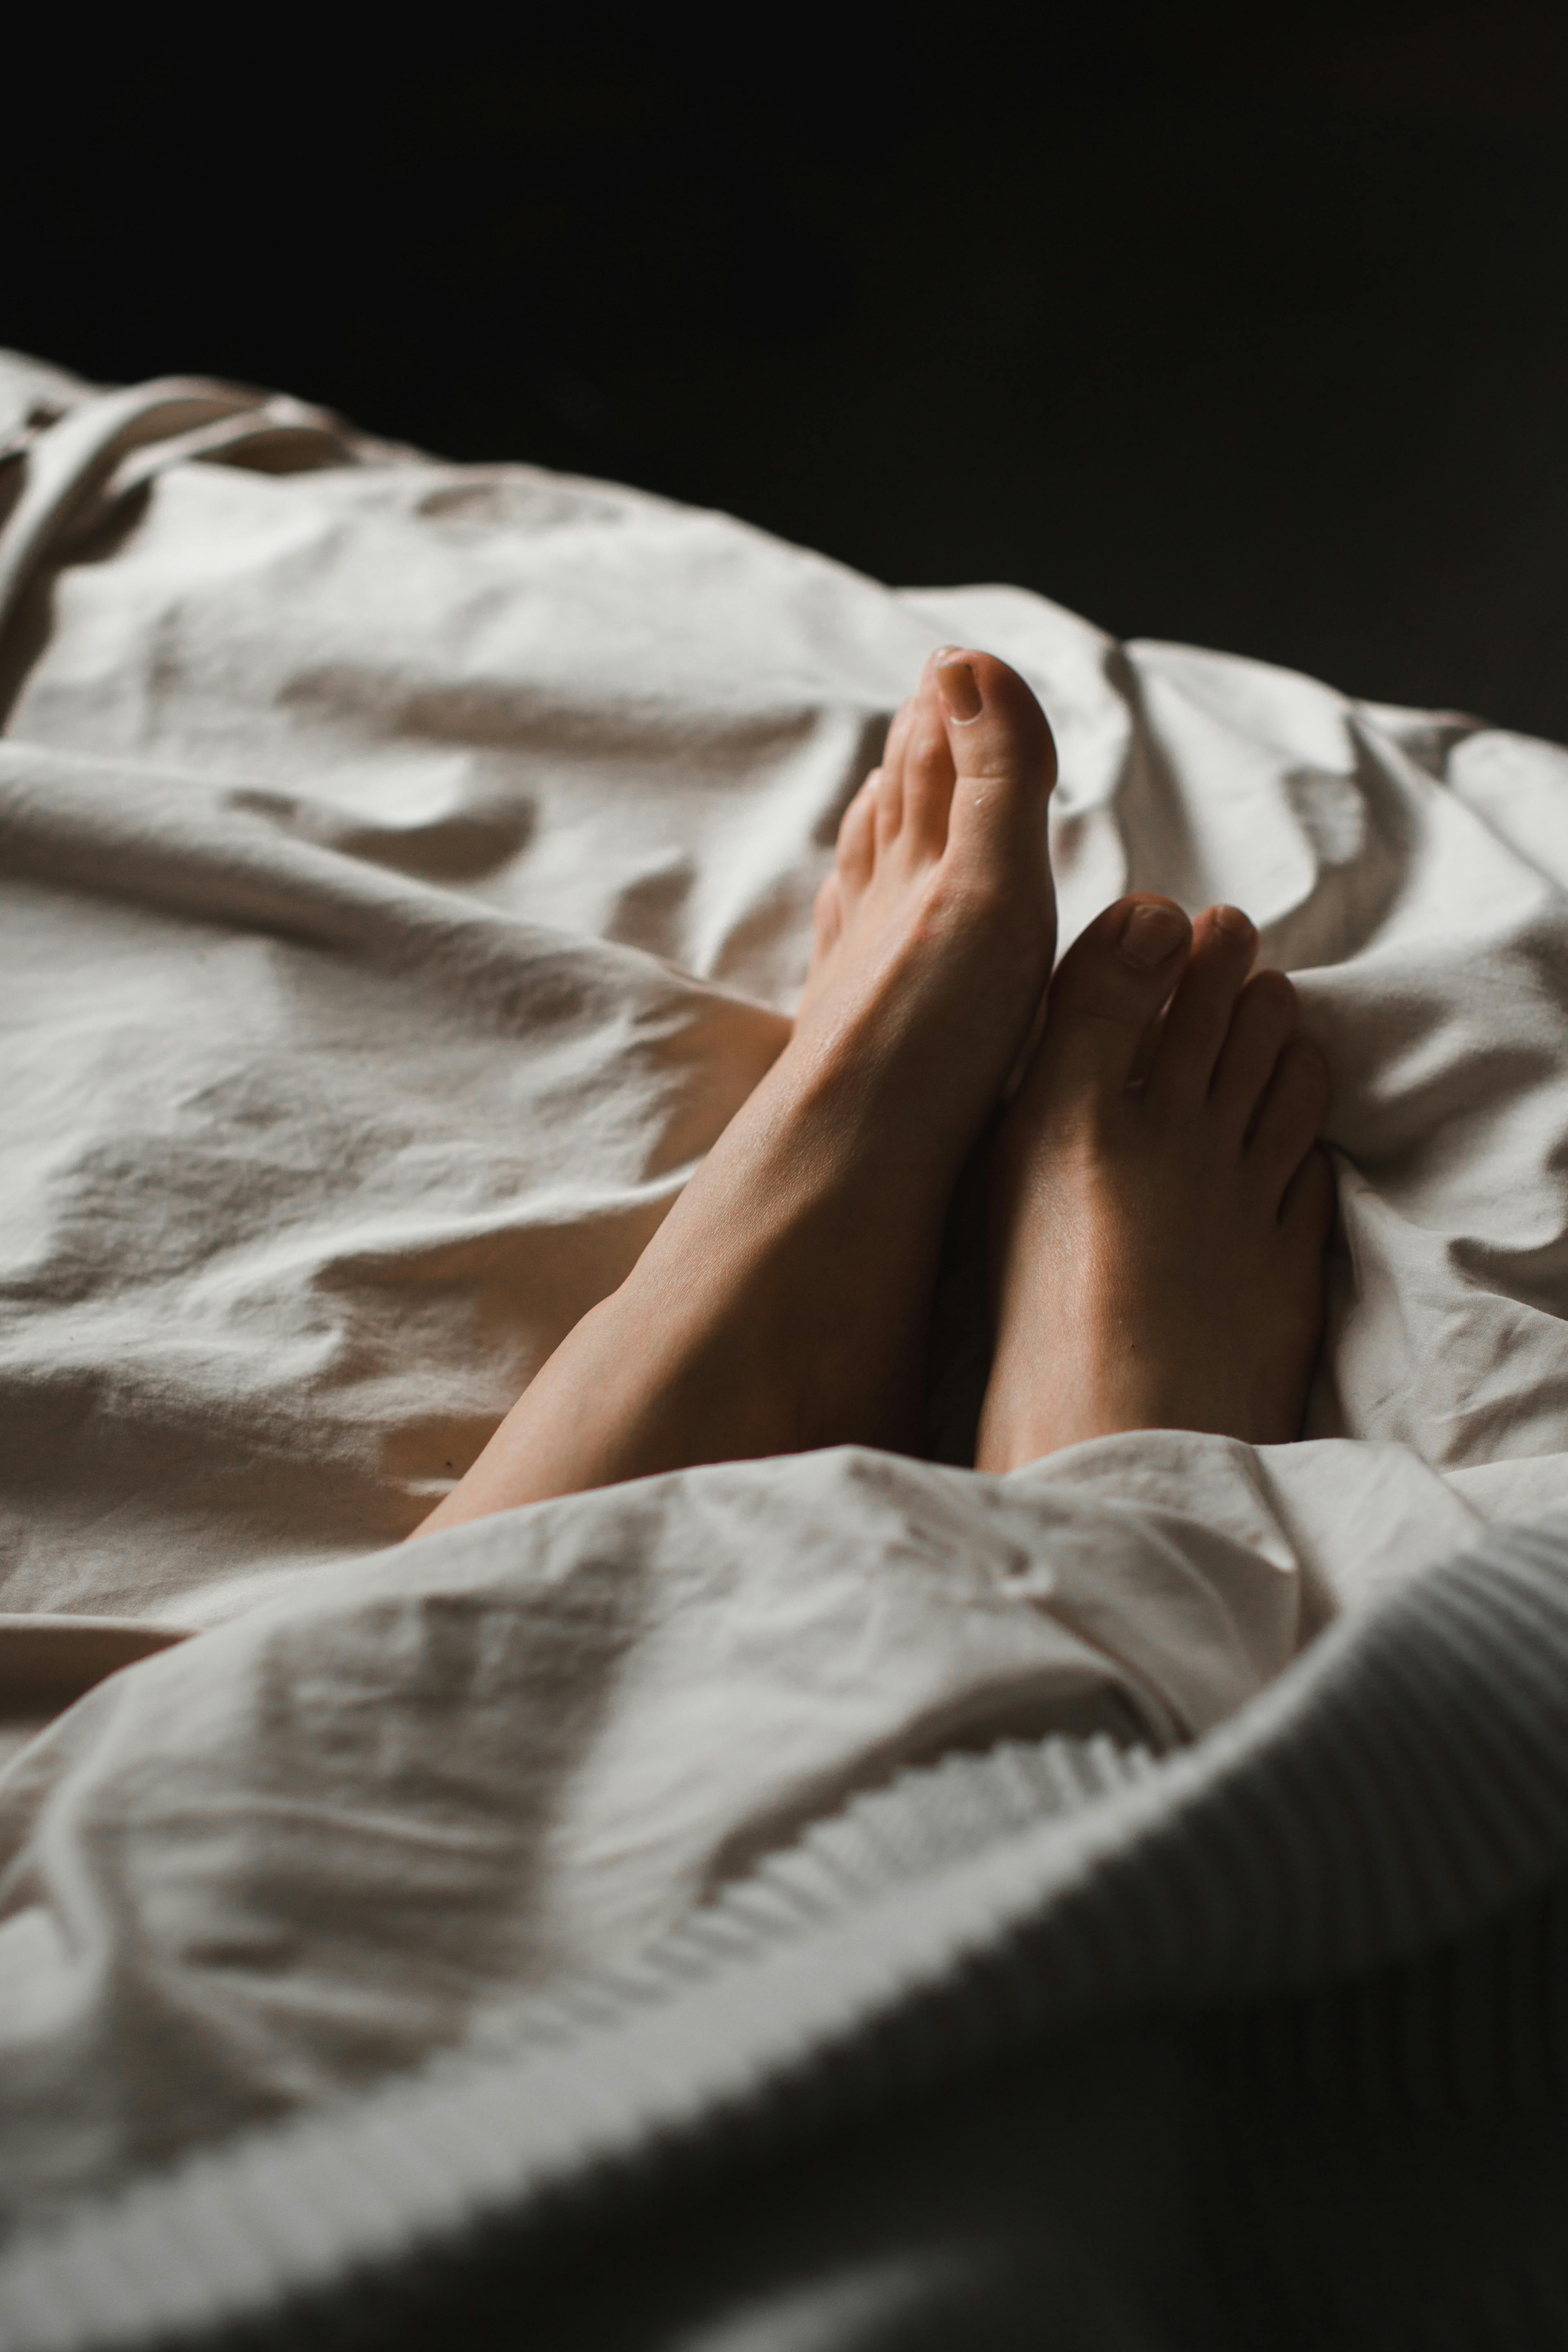 Why do girls sleep with their leg up?